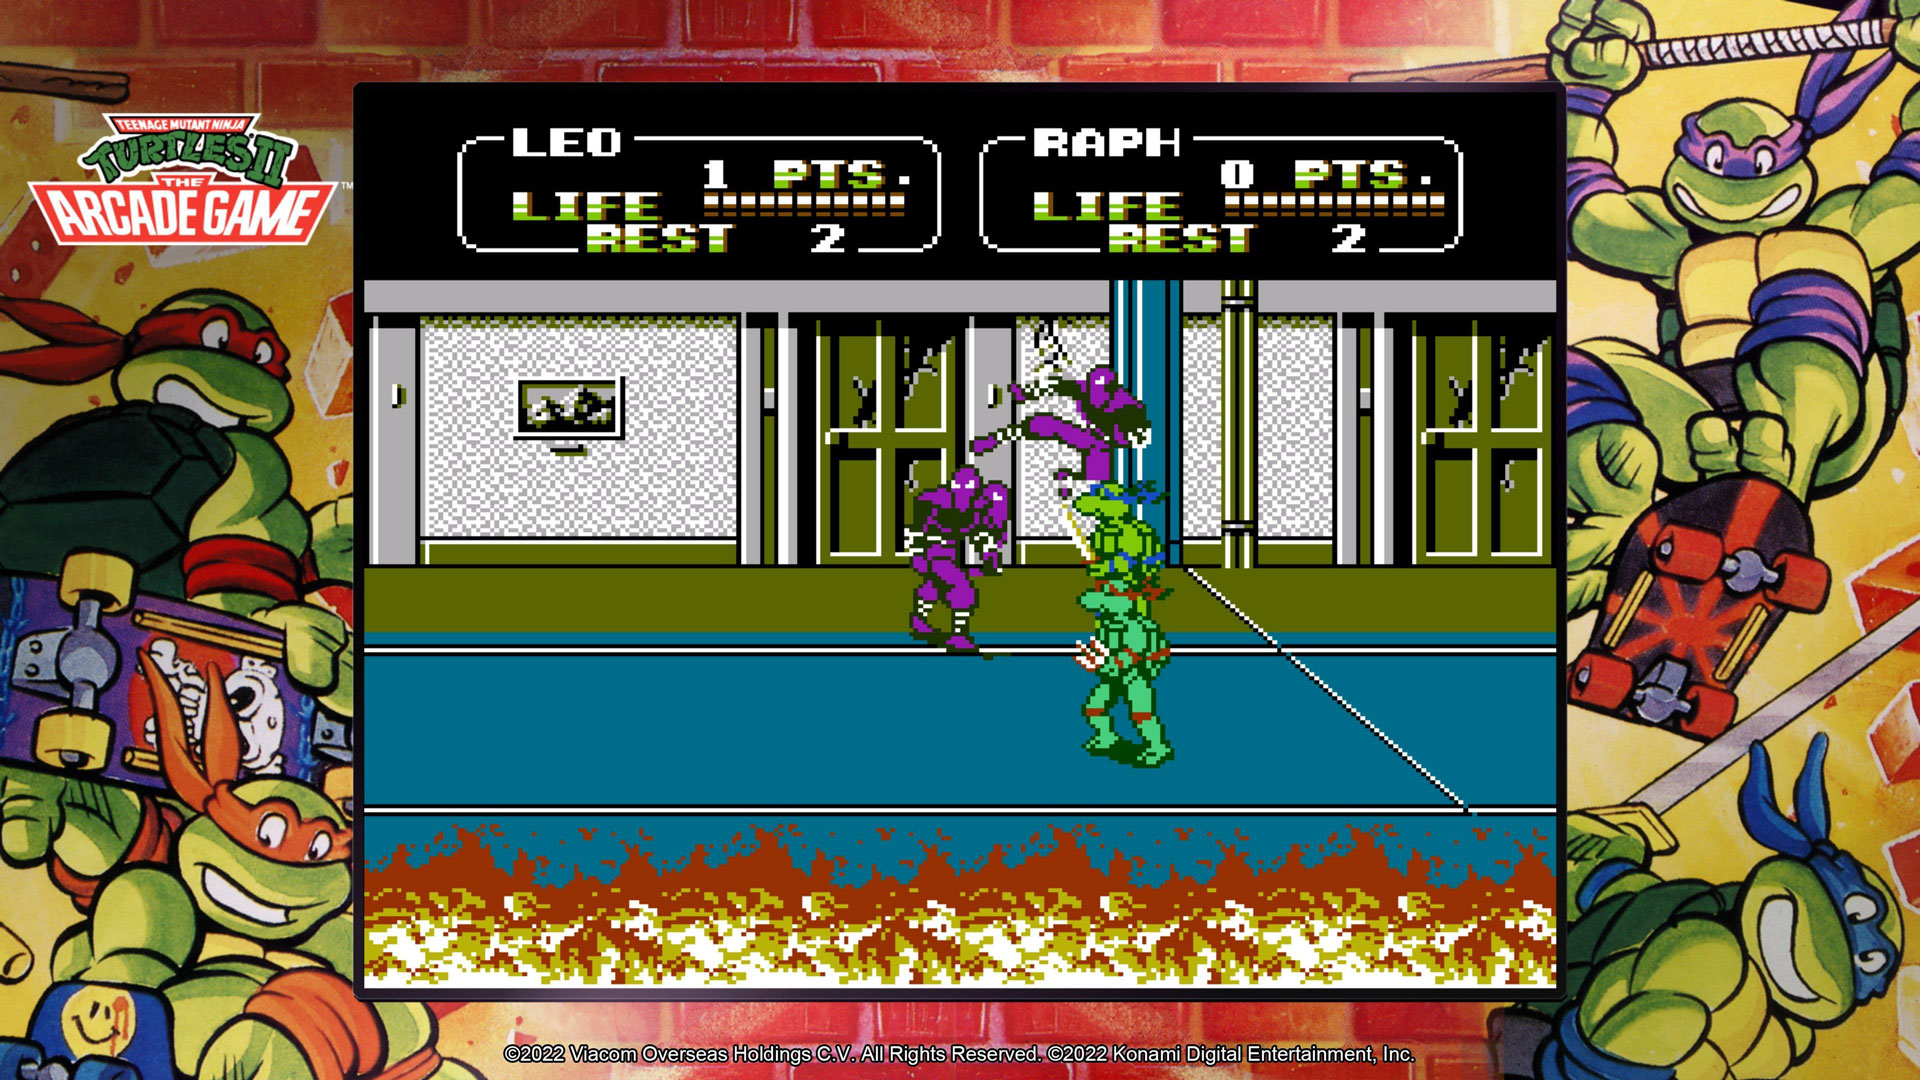 Jogo Teenage Mutant Ninja Turtles Cowabunga Collection para PS4